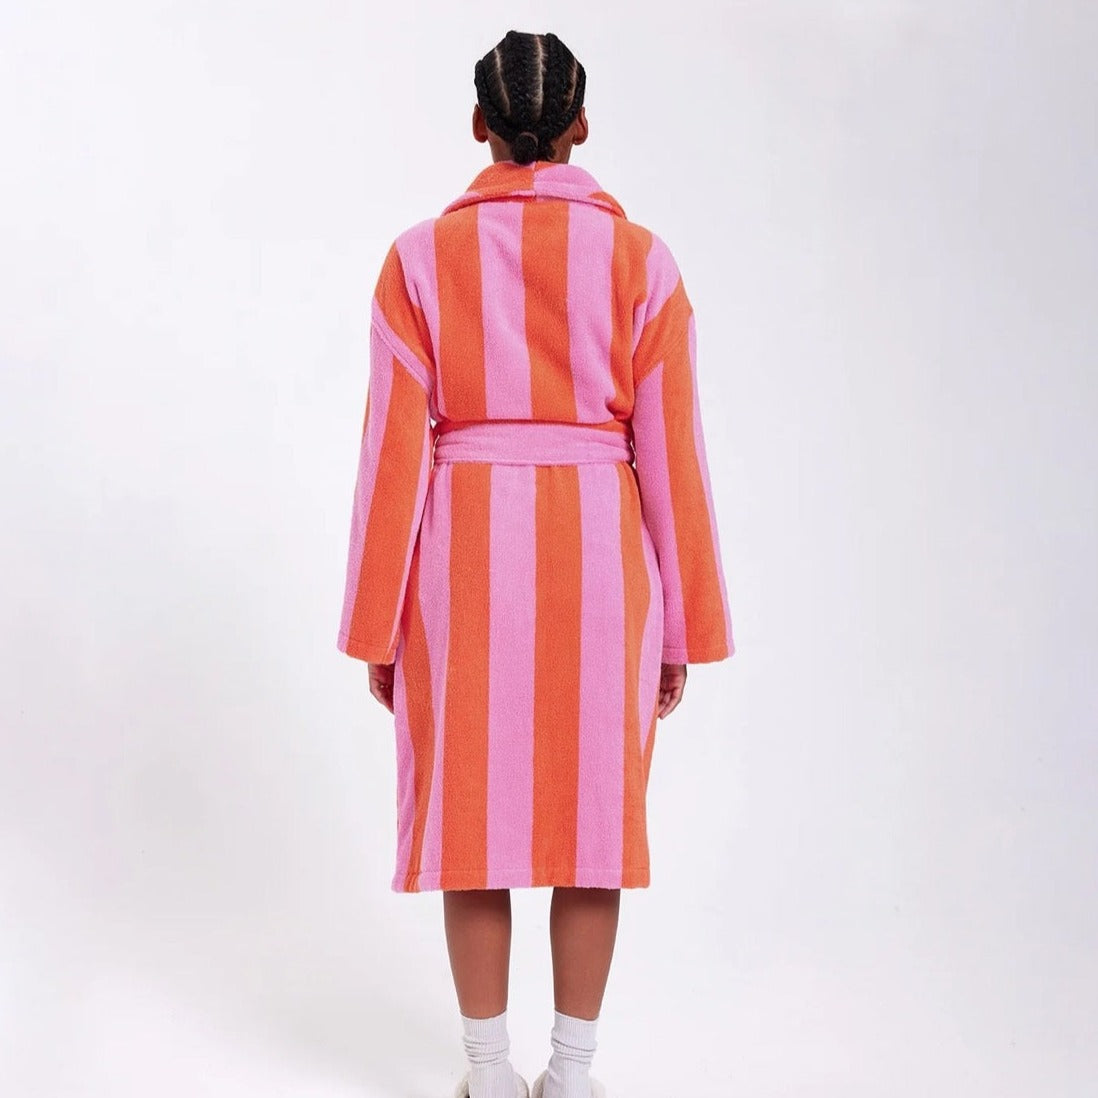 Hommey Cotton Robe - Stripes